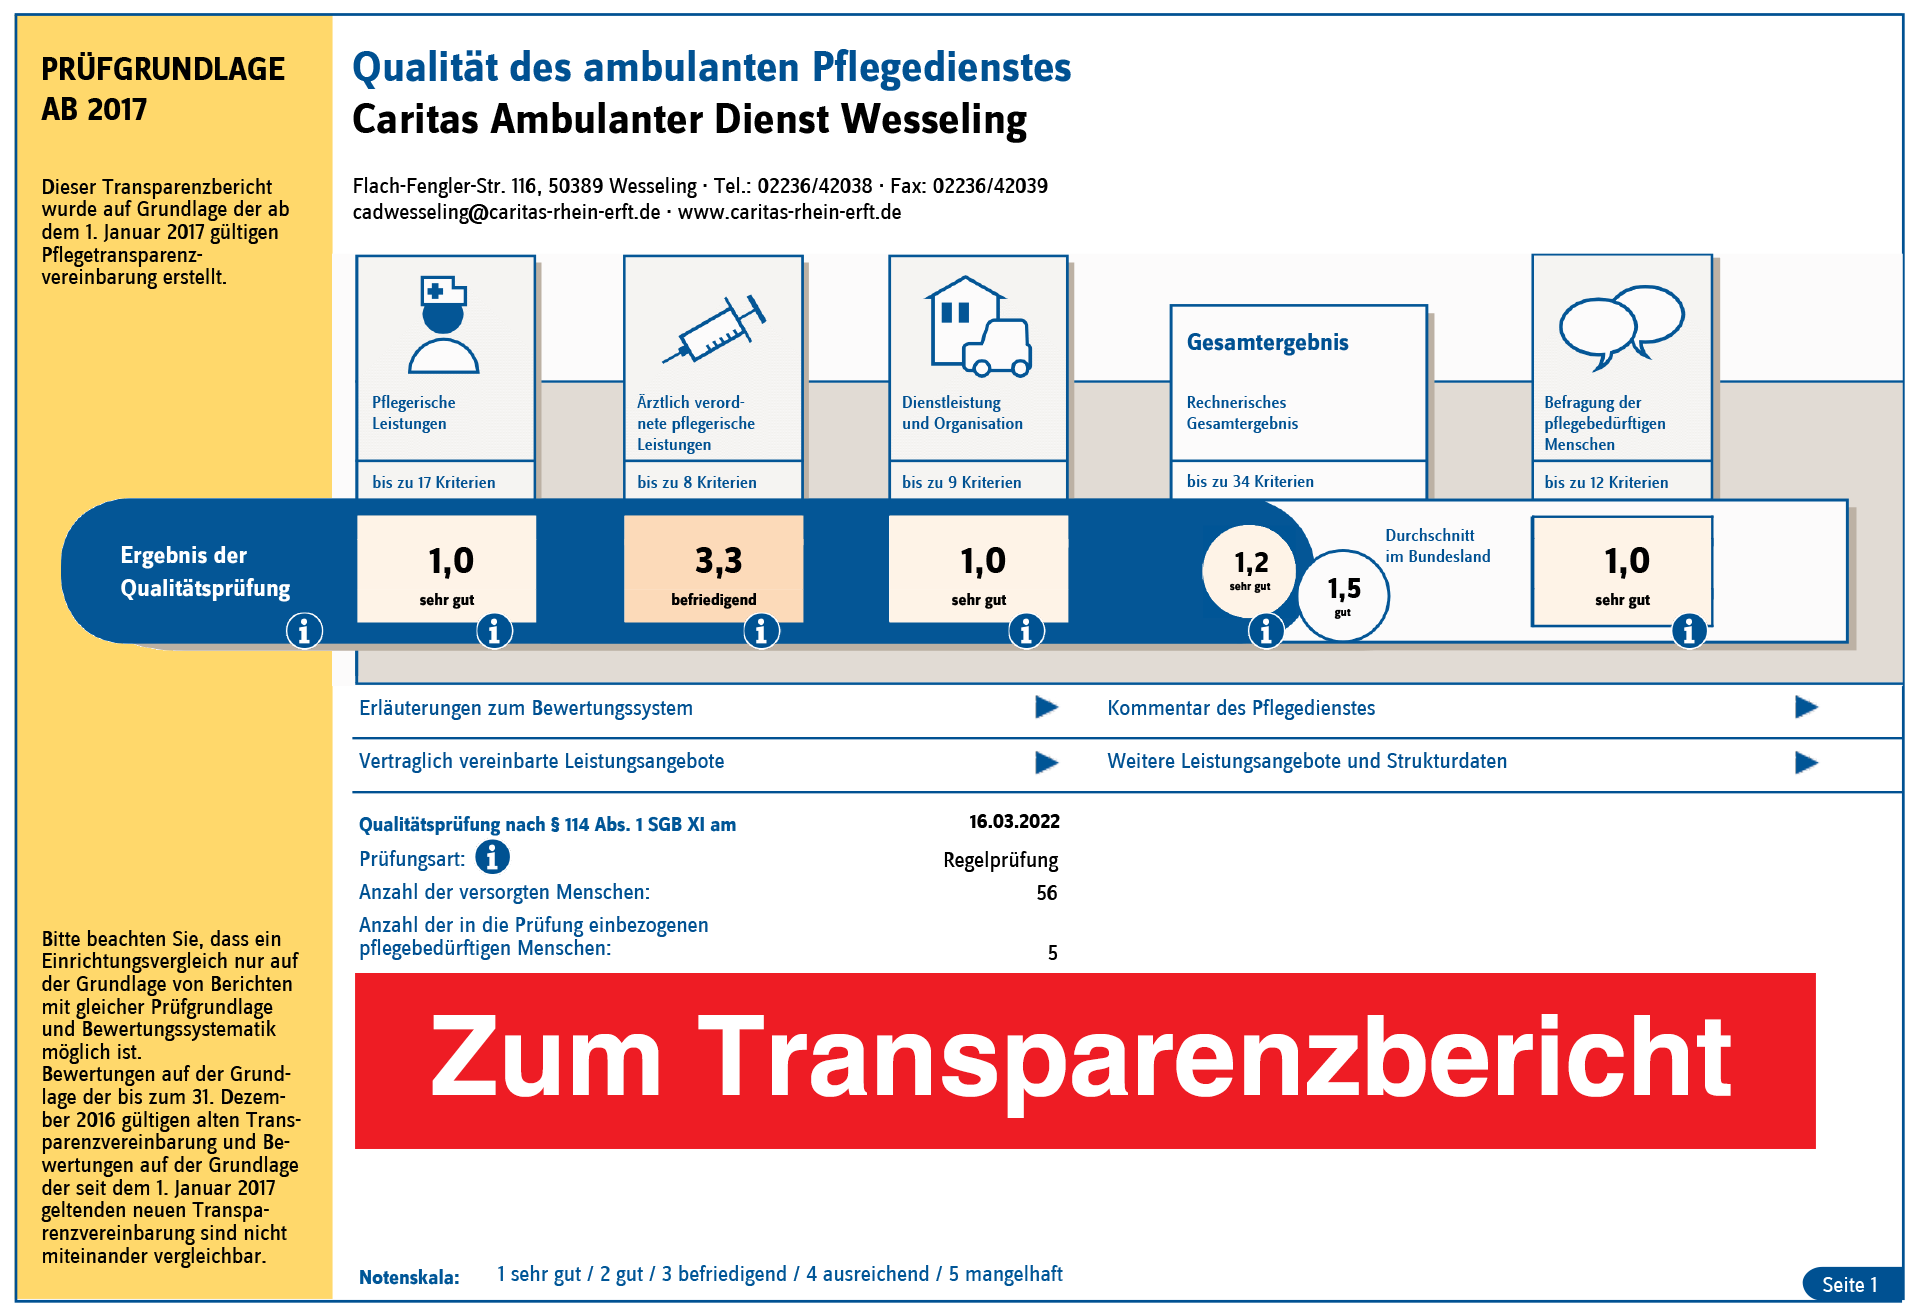 230104_Endgültiger Transparenzbericht_Vorschau_CAD Wesseling (c) Caritas Rhein-Erft